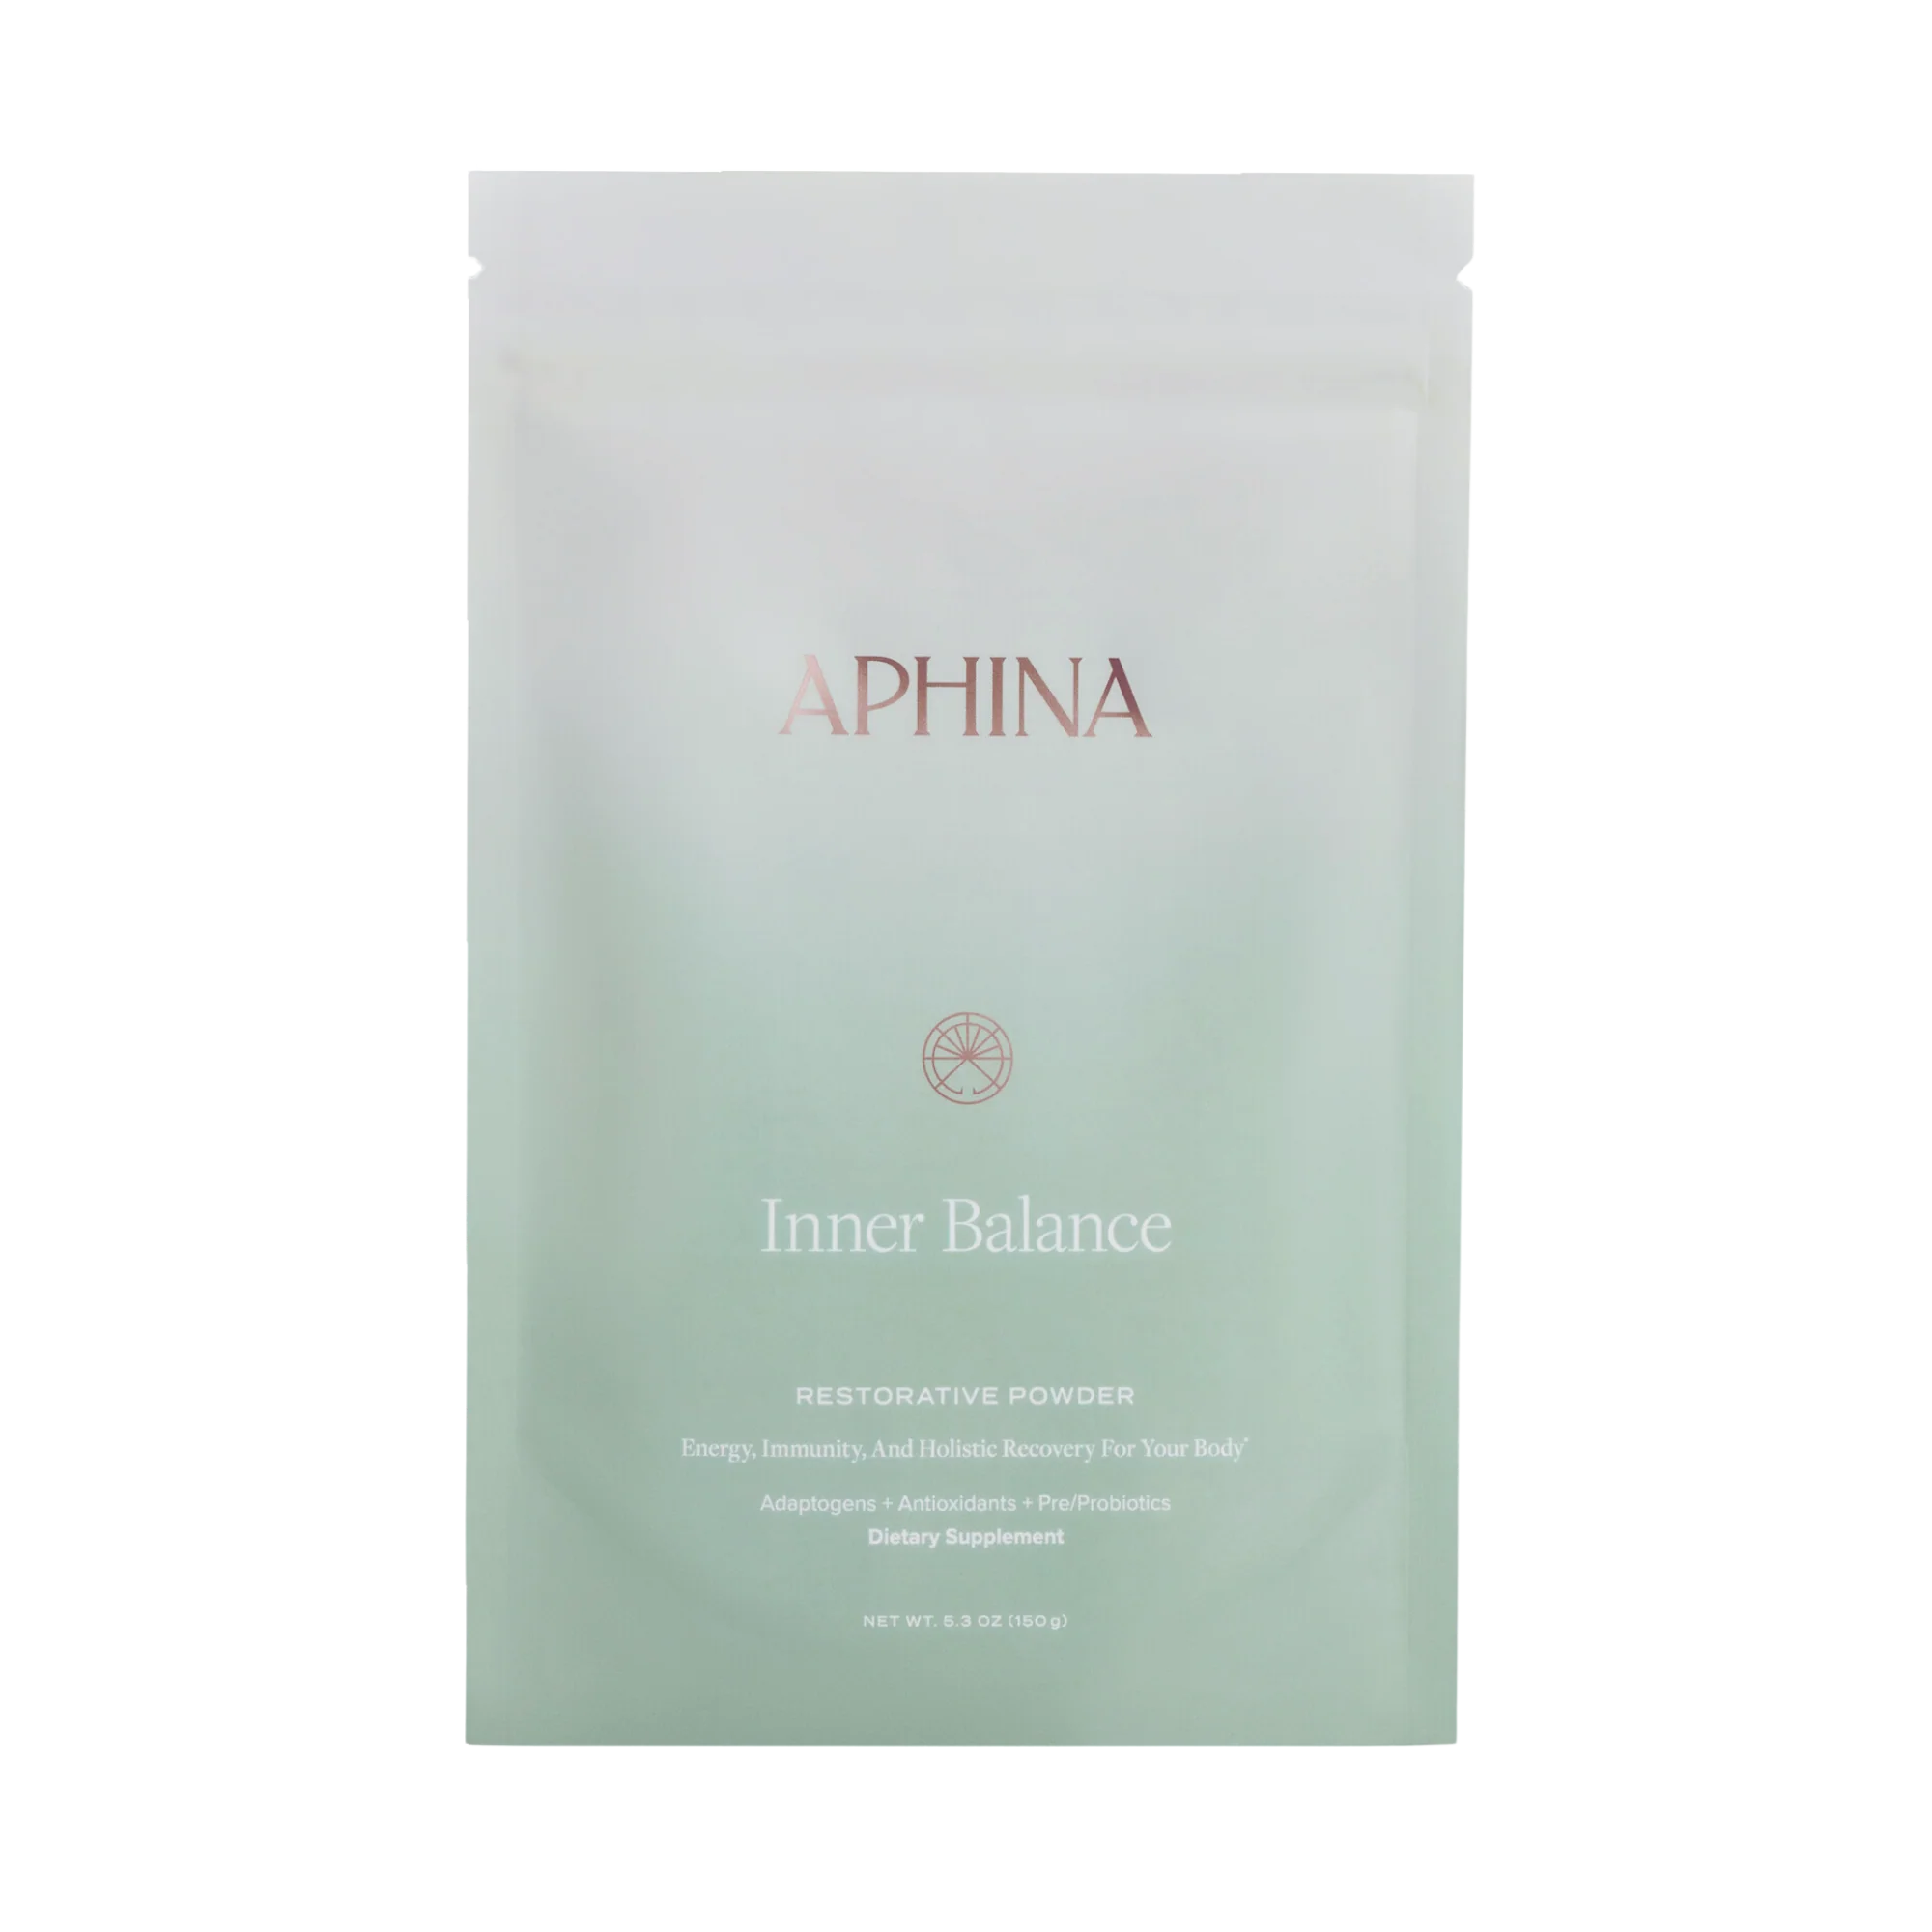 Aphina Inner Balance Restorative Powder 79$